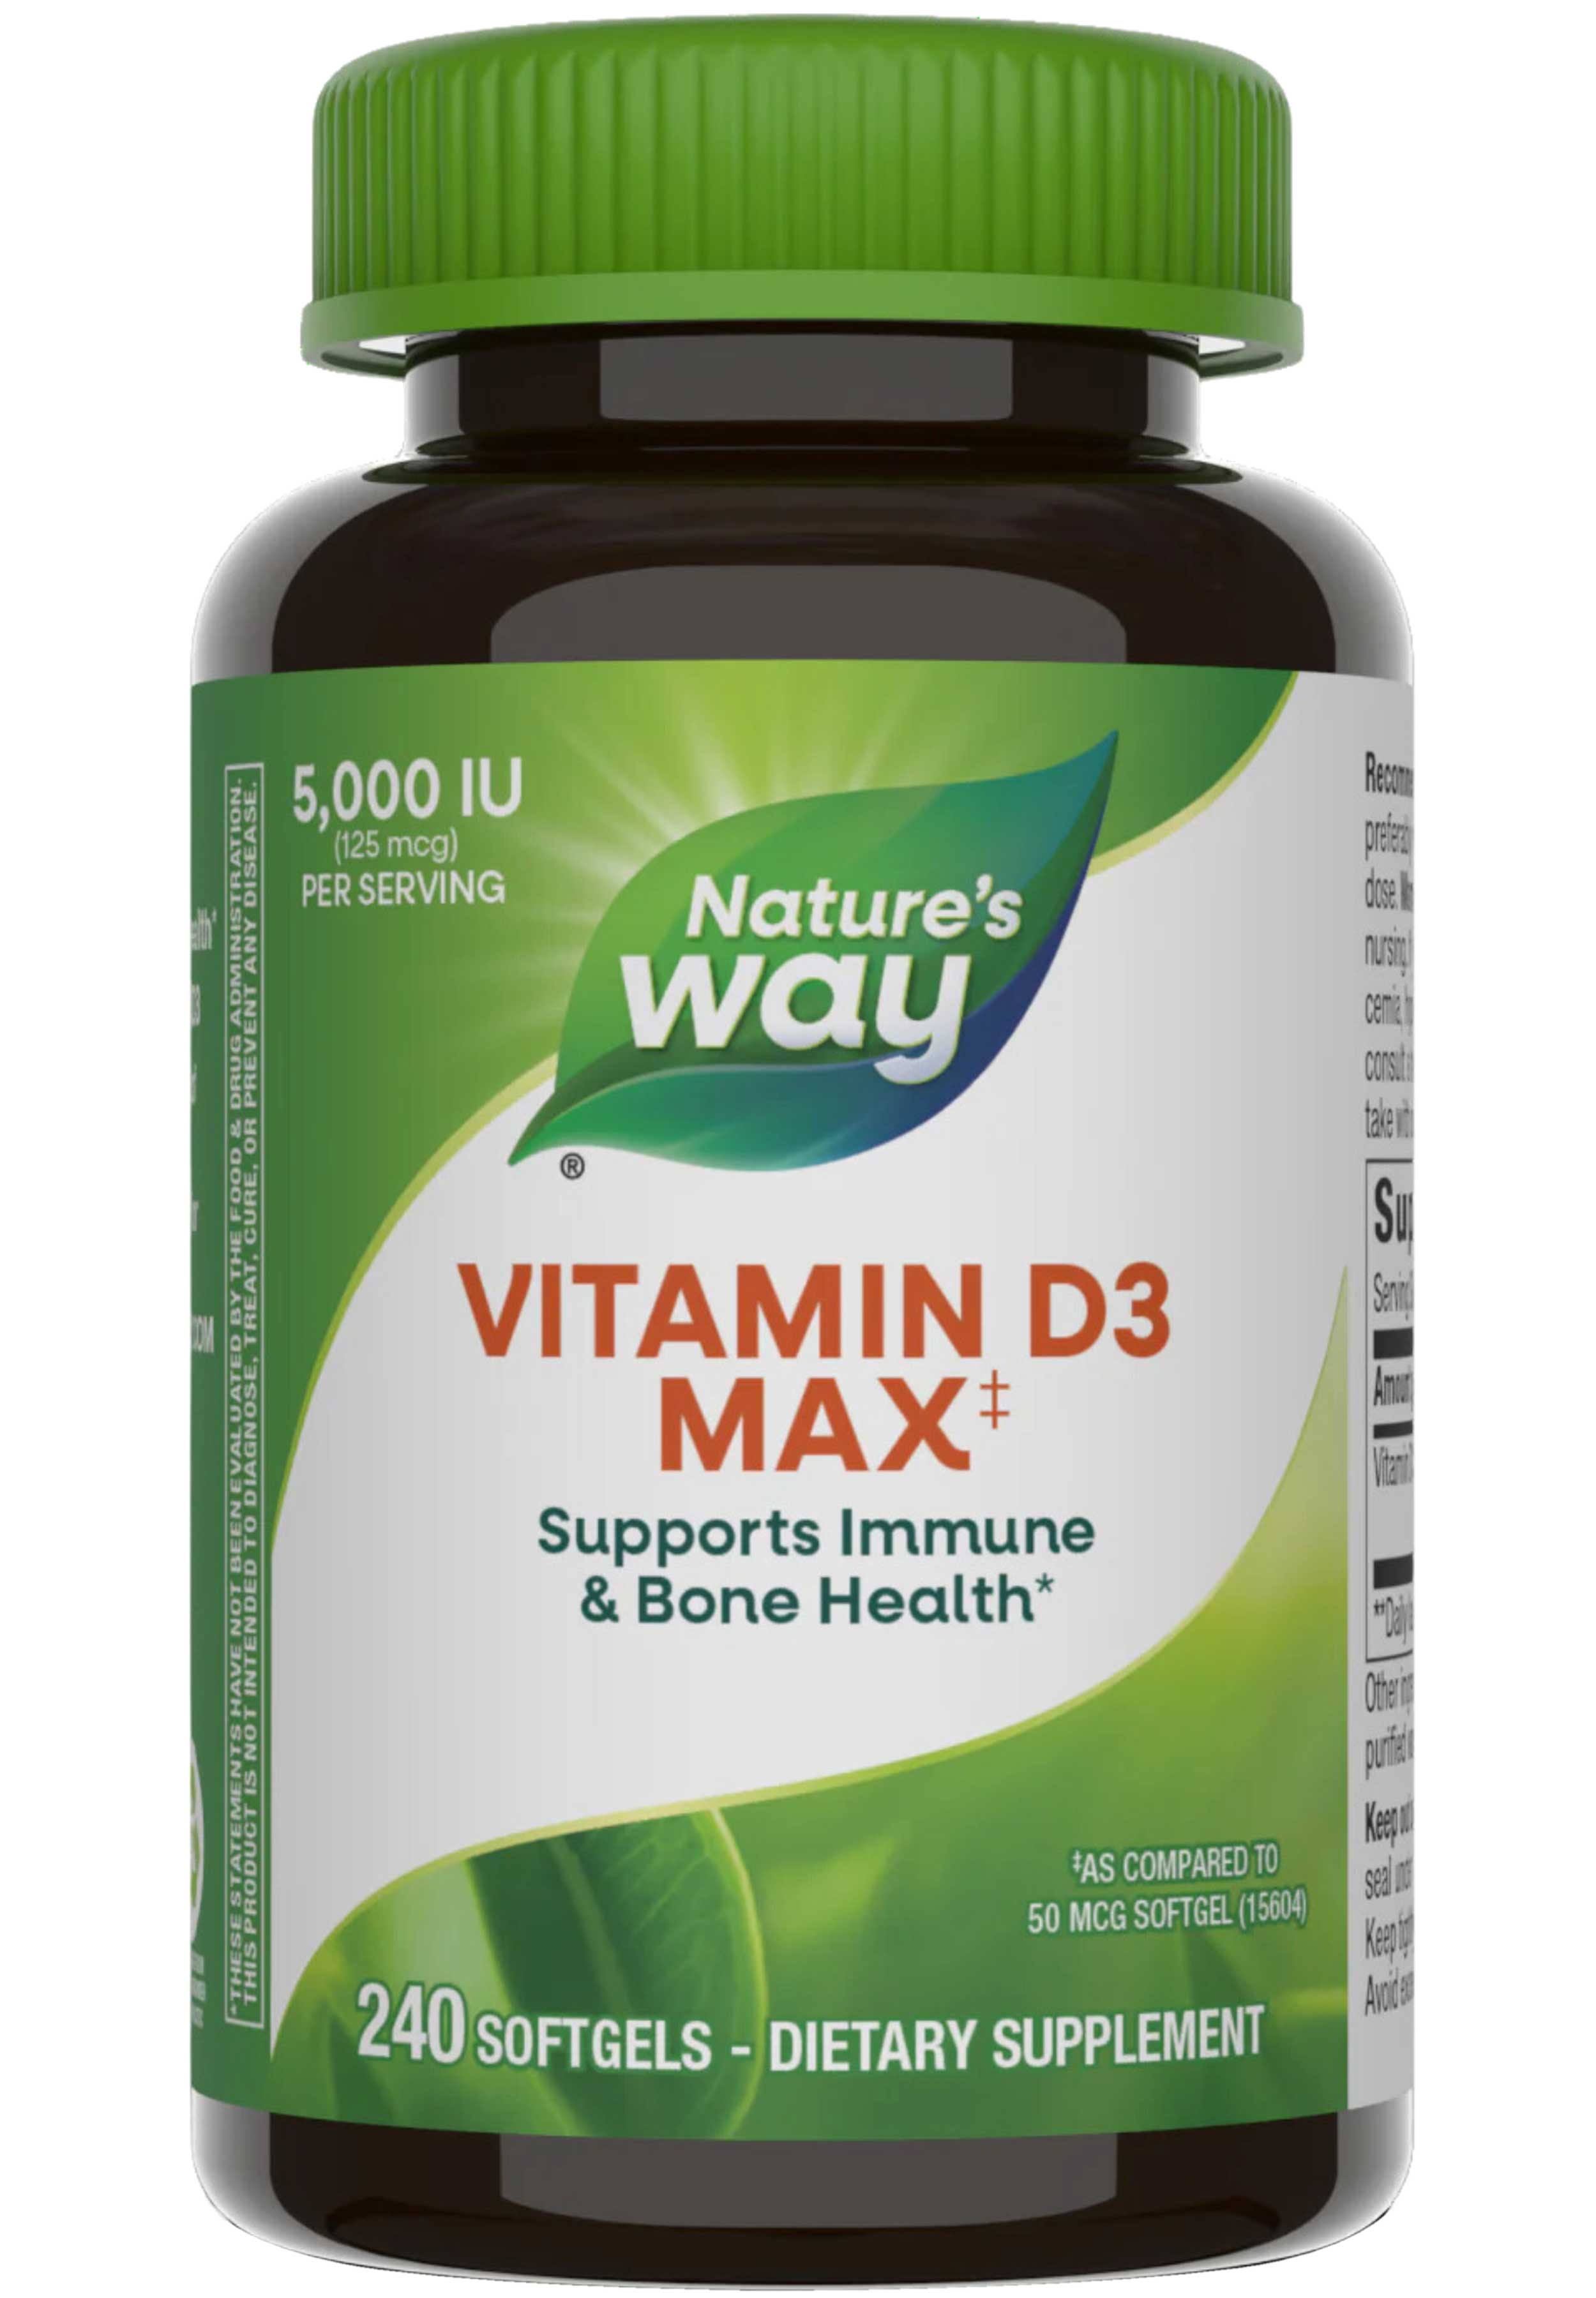 Nature's Way Vitamin D3 Max 5,000 IU (125 mcg)